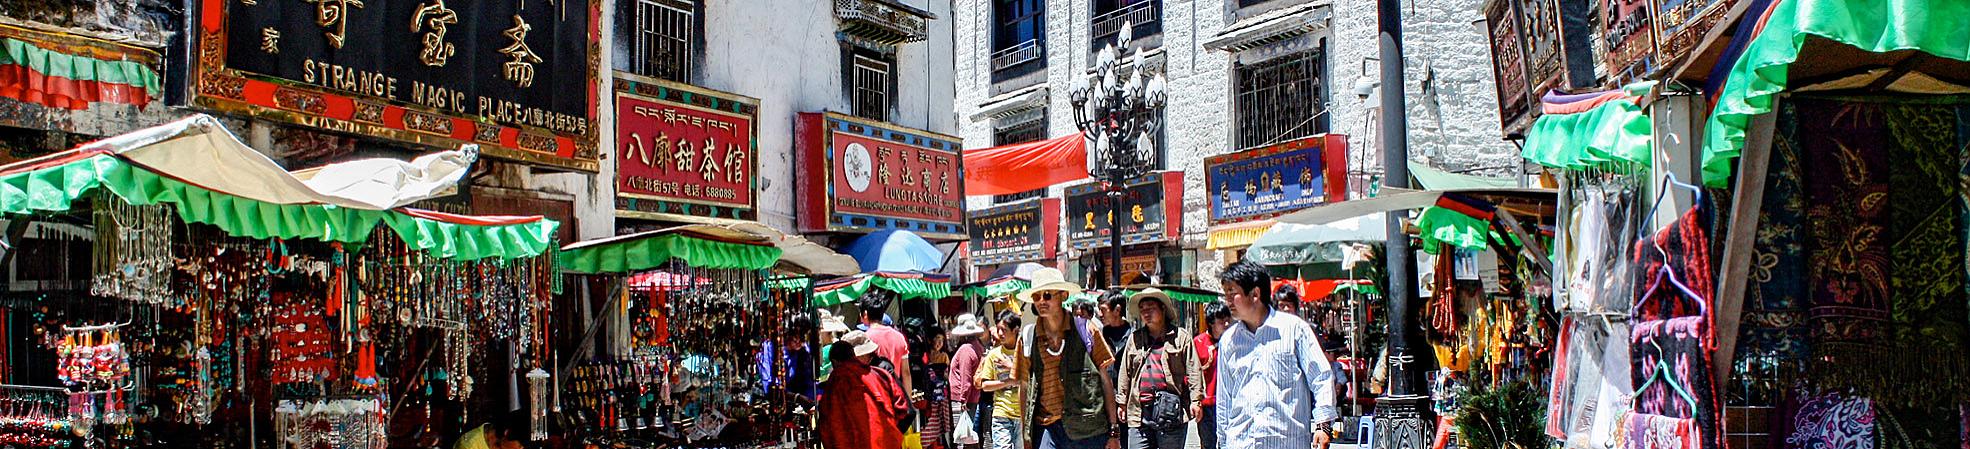 Tibet travel restriction